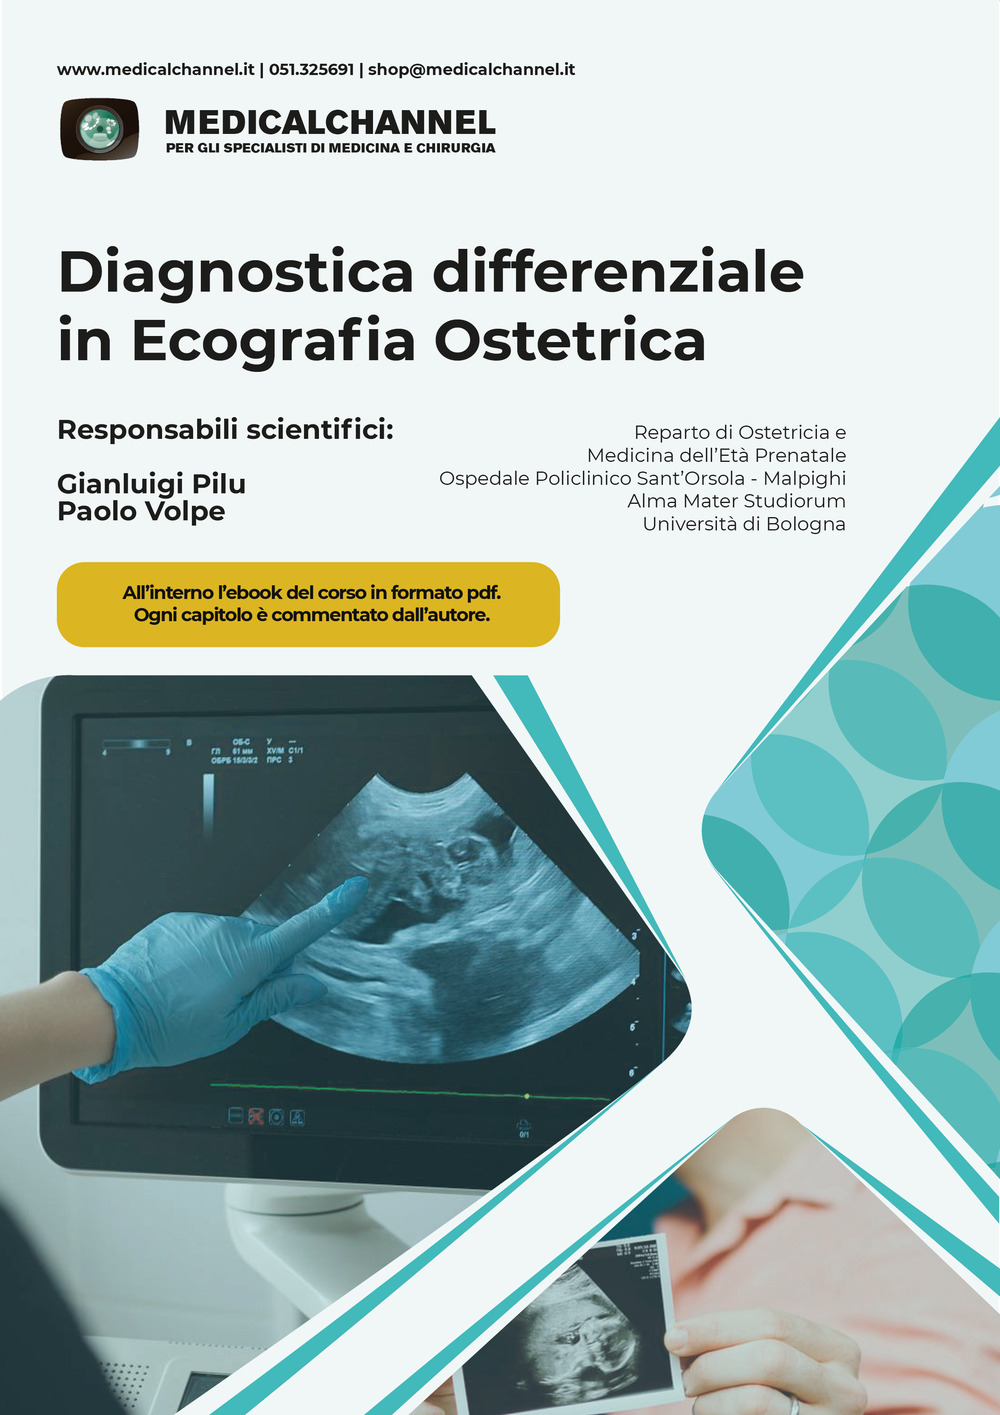 Diagnostica differenziale in ecografia ostetrica